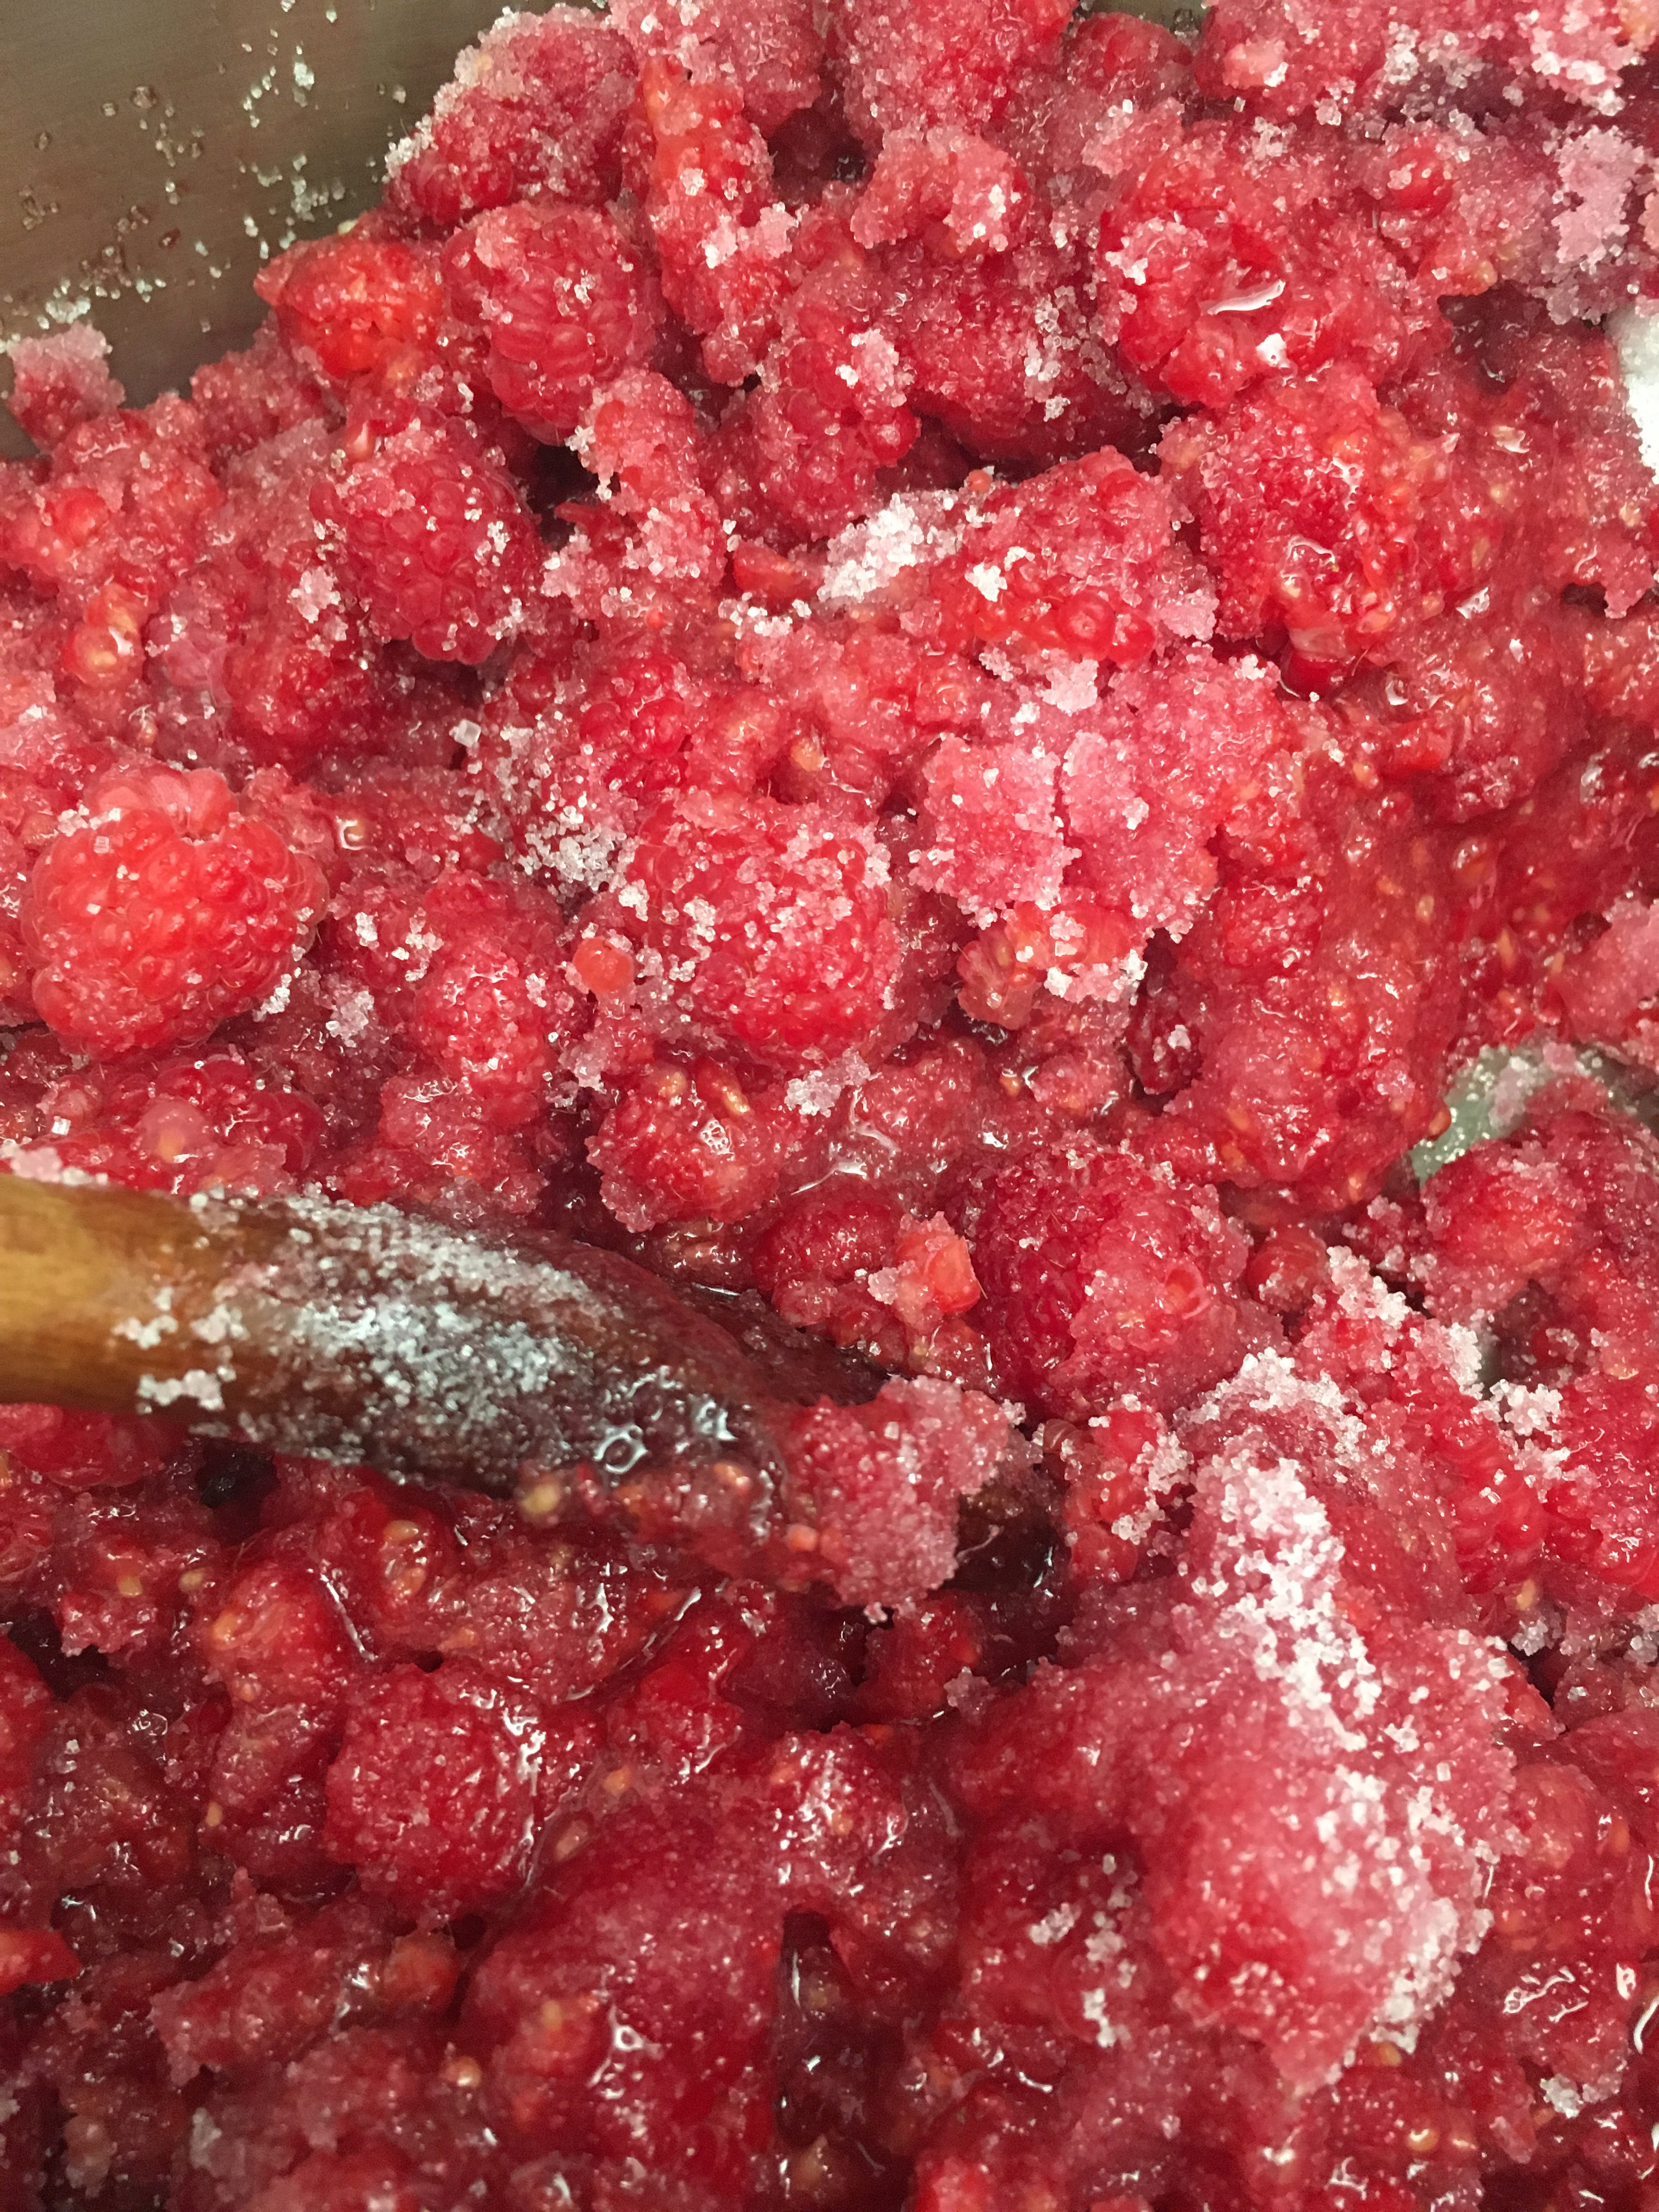 Raspberry jam cooking